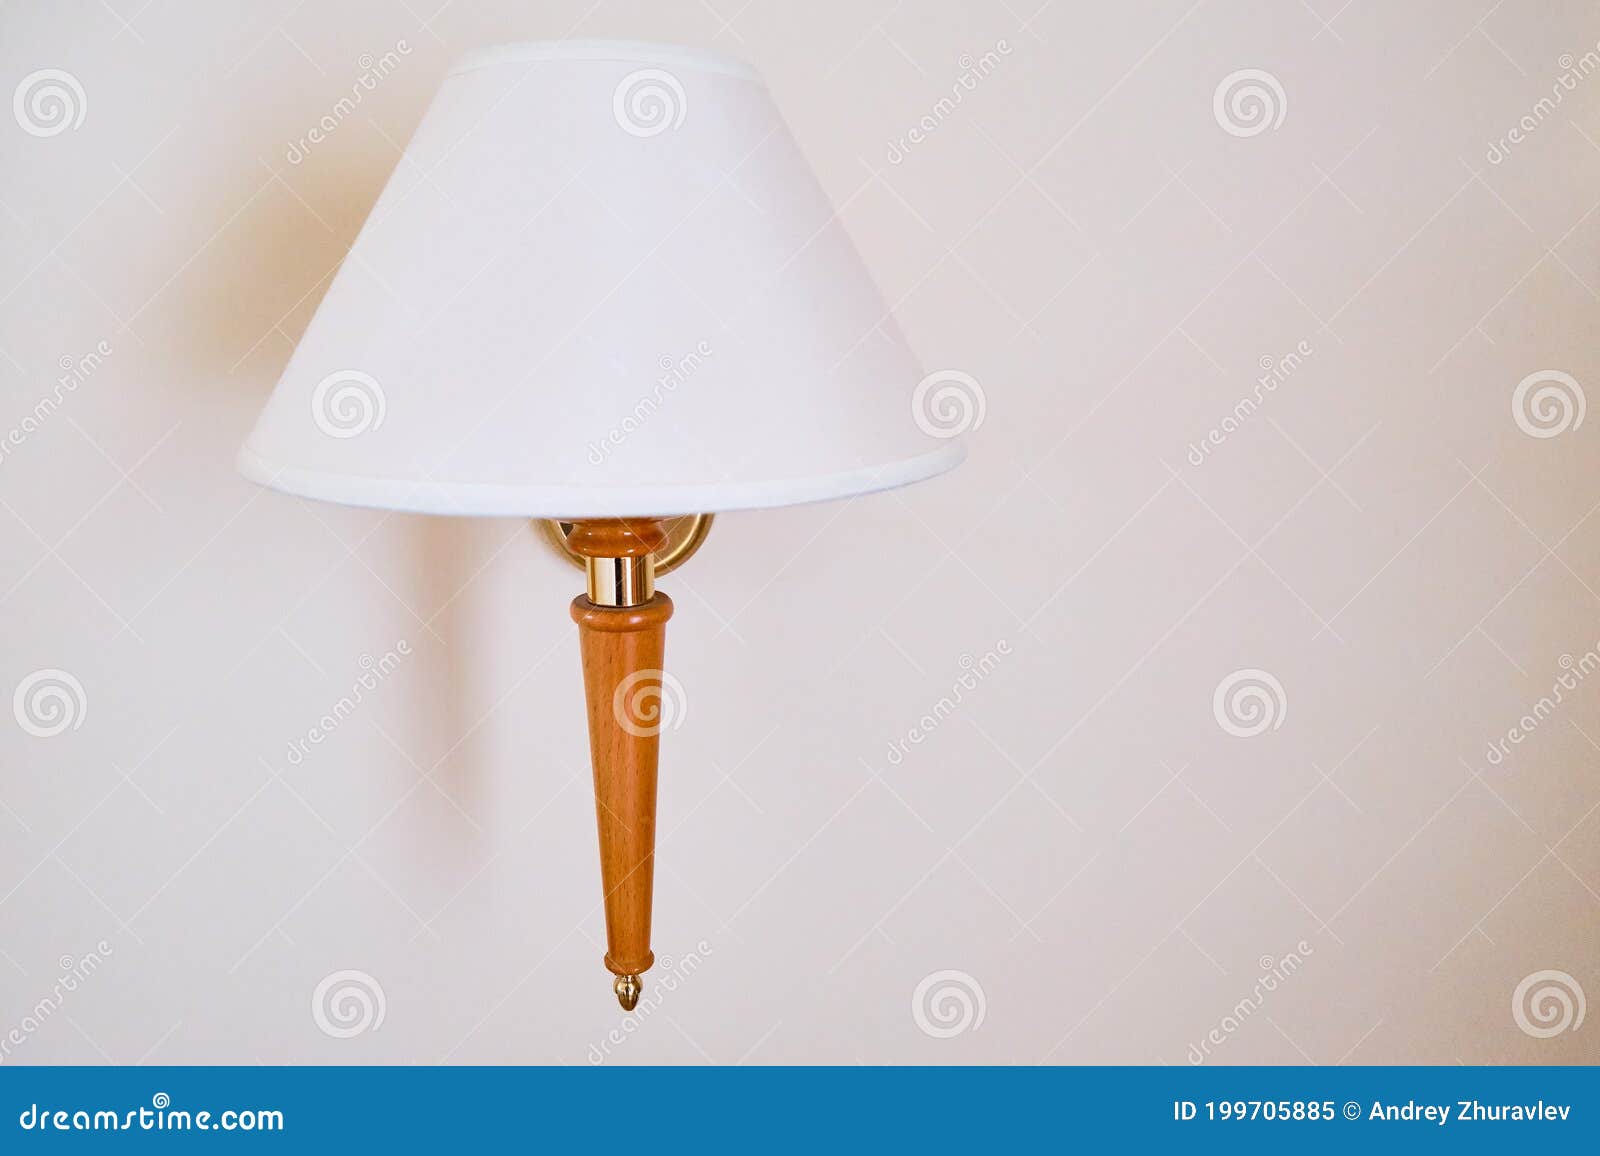 LED Cone Lamp